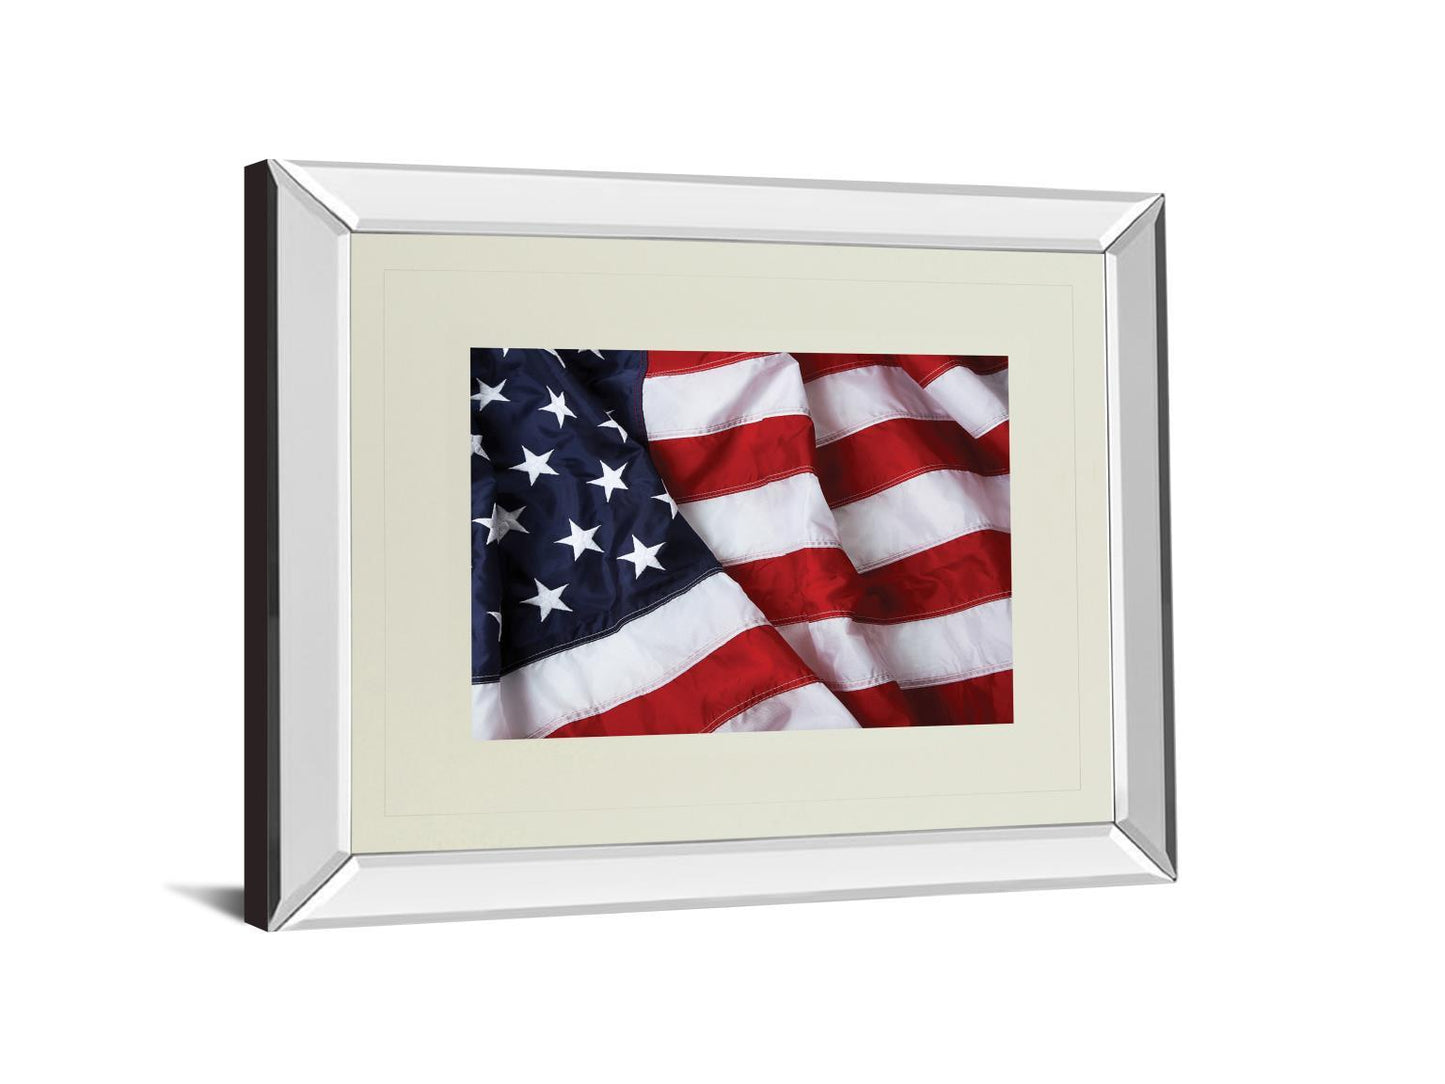 American Flag By Kikk Brilliantly - Mirror Framed Wall Art - Red